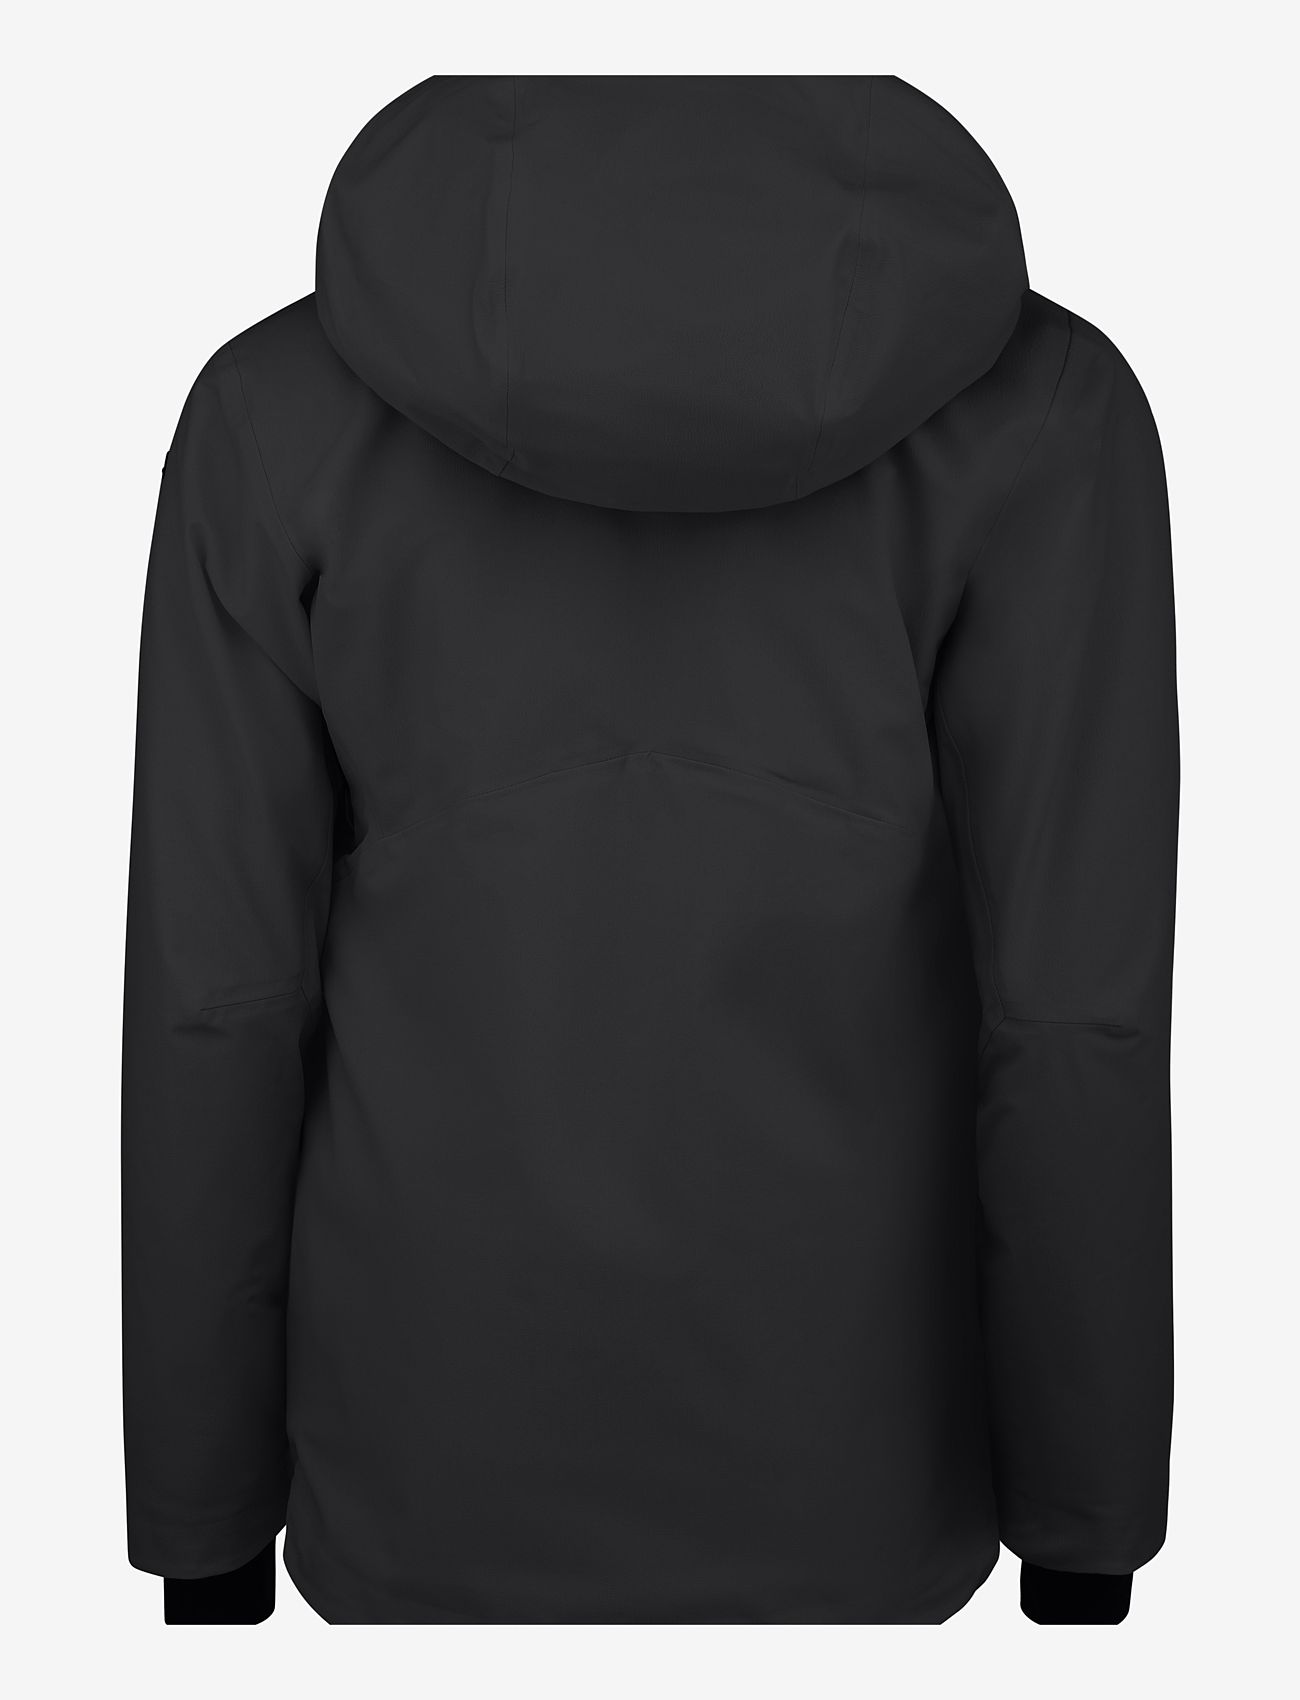 Head - KORE NORDIC Jacket Women - ski jackets - black - 1